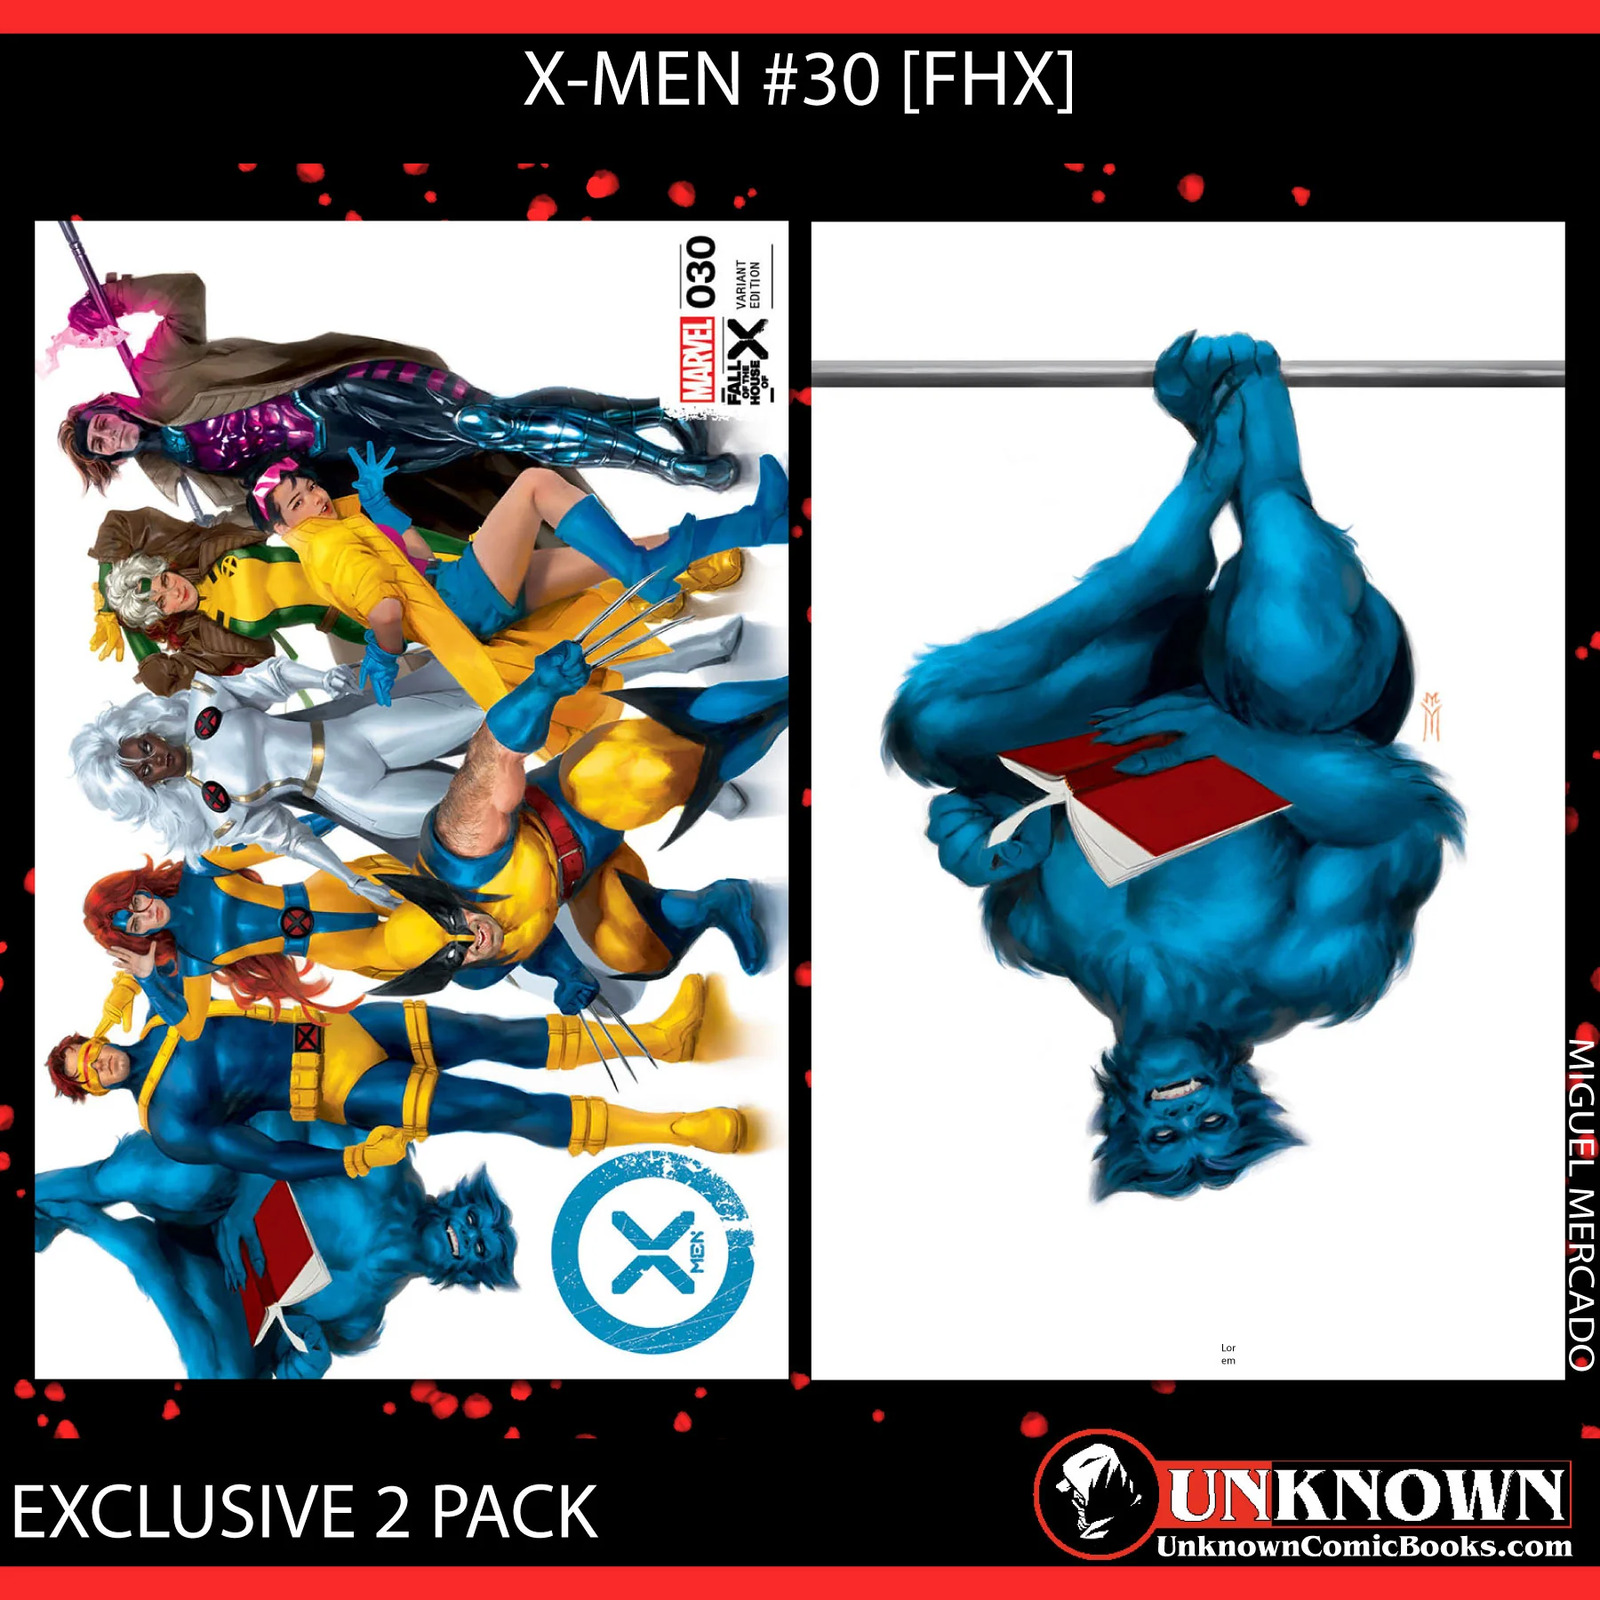 [2 PACK] X-MEN #30 [FHX] UNKNOWN COMICS MIGUEL MERCADO EXCLUSIVE VOGUE VAR (01/1